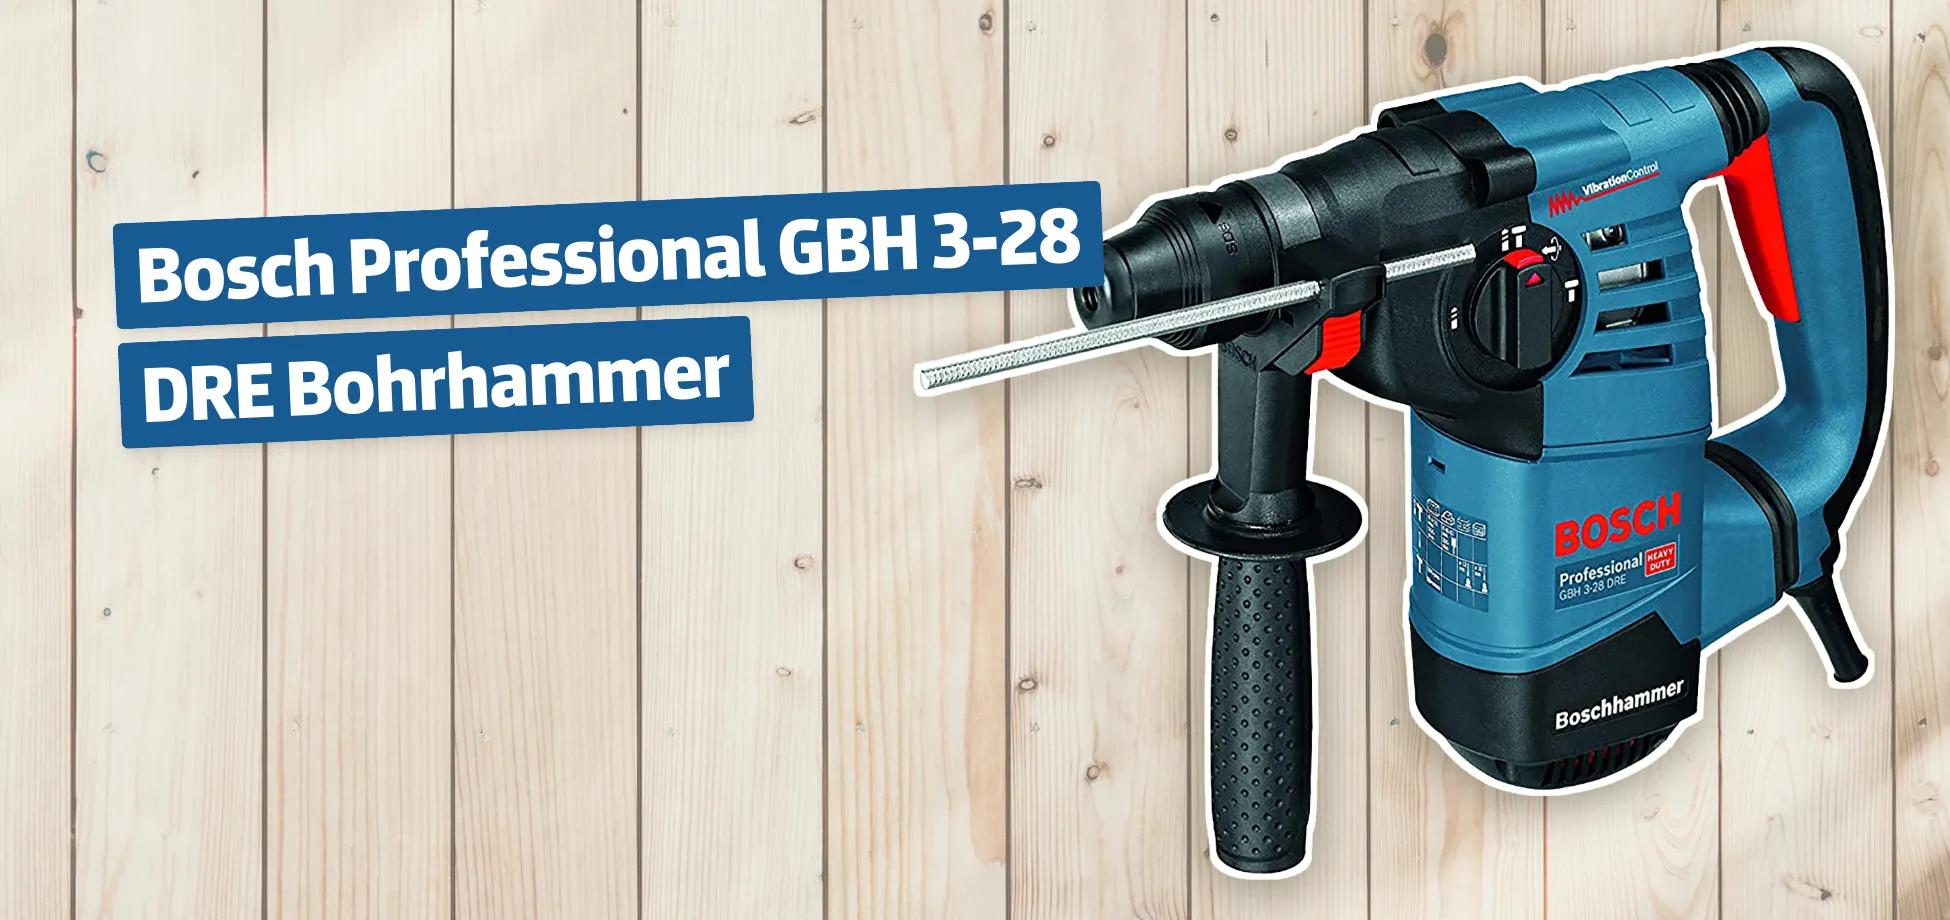 Bosch Professional GBH 3-28 DRE Bohrhammer